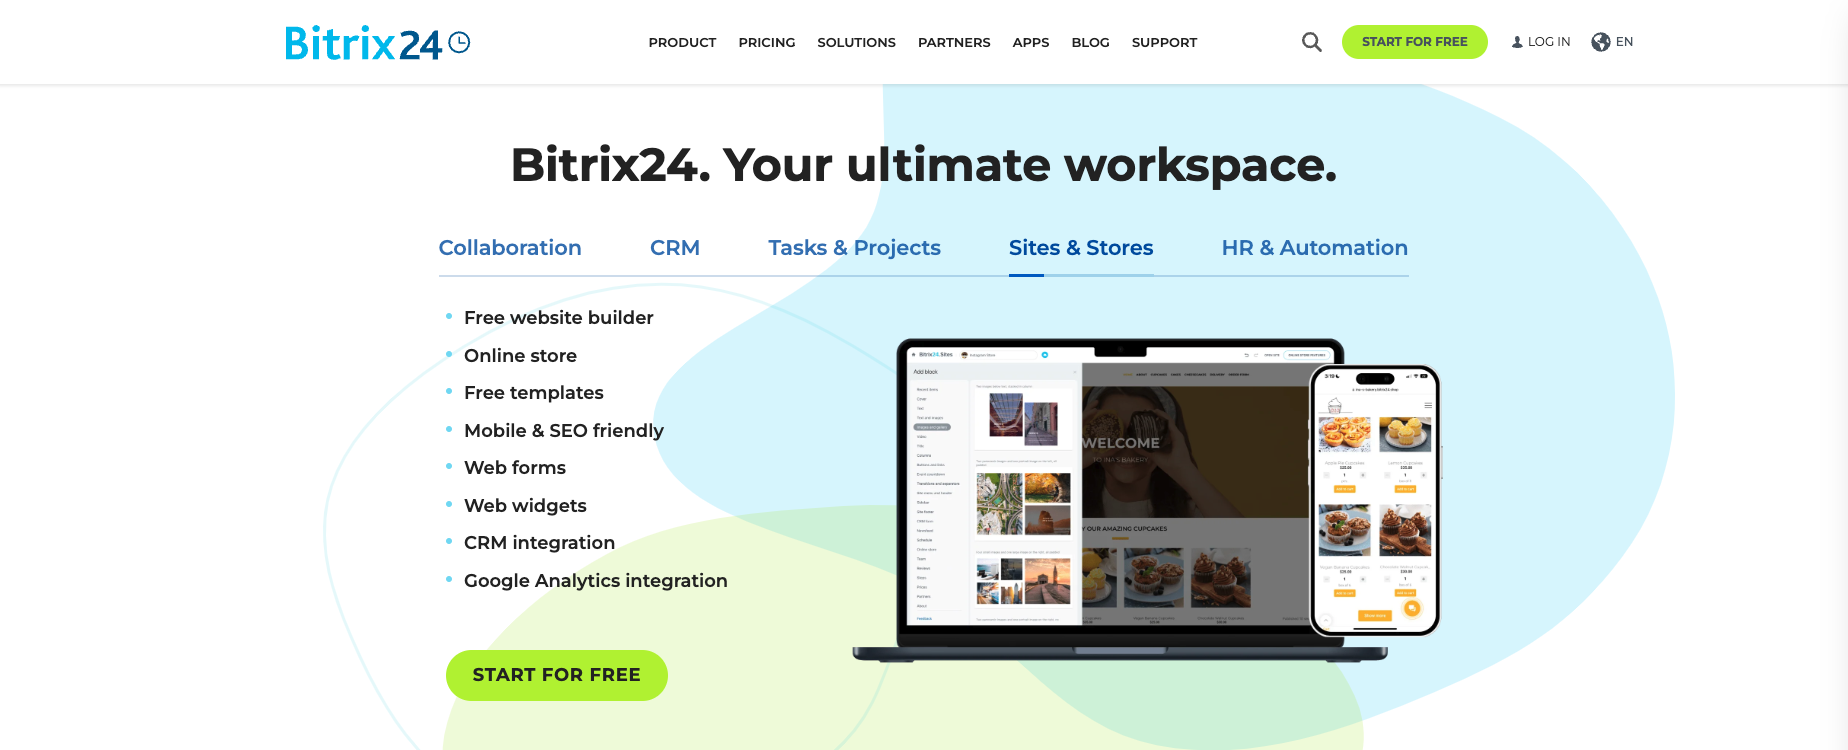 Bitrix24 open source scheduling software homepage screenshot